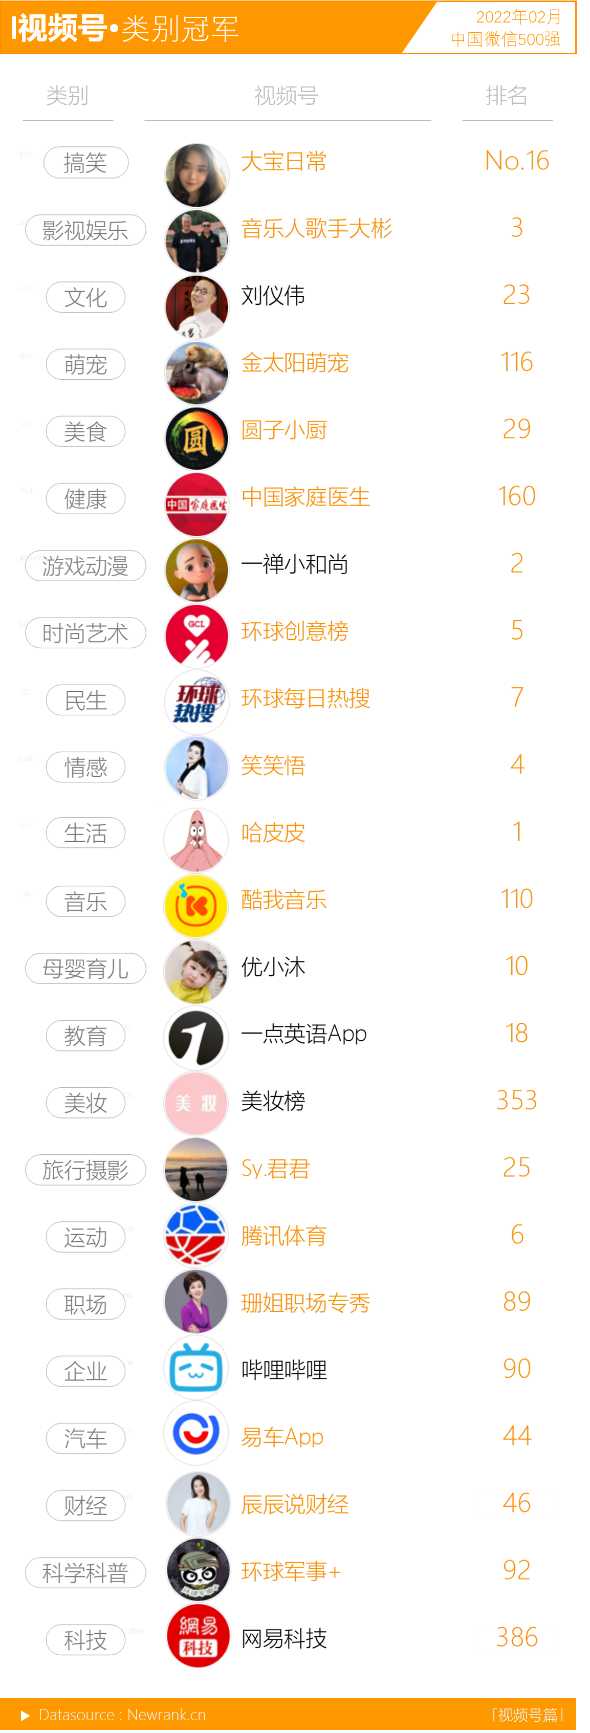 <a href='https://www.zhouxiaohui.cn
' target='_blank'><a href='https://www.zhouxiaohui.cn/duanshipin/
' target='_blank'>视频号</a></a>TOP10大换员，头部竞争激烈； | 中国微信500强月报（2022.02）-第5张图片-周小辉博客